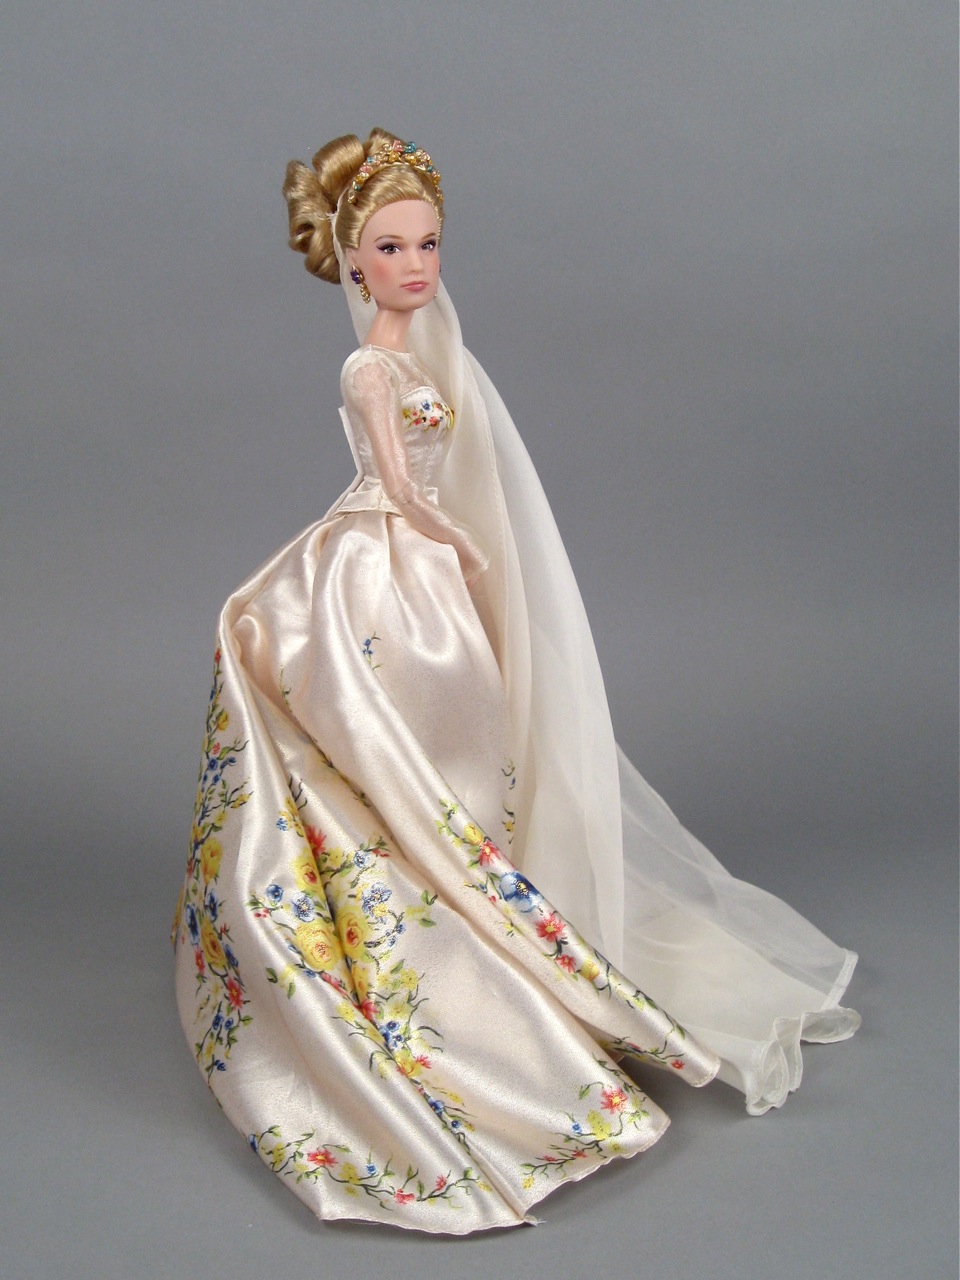 Disney Store's wedding Cinderella doll